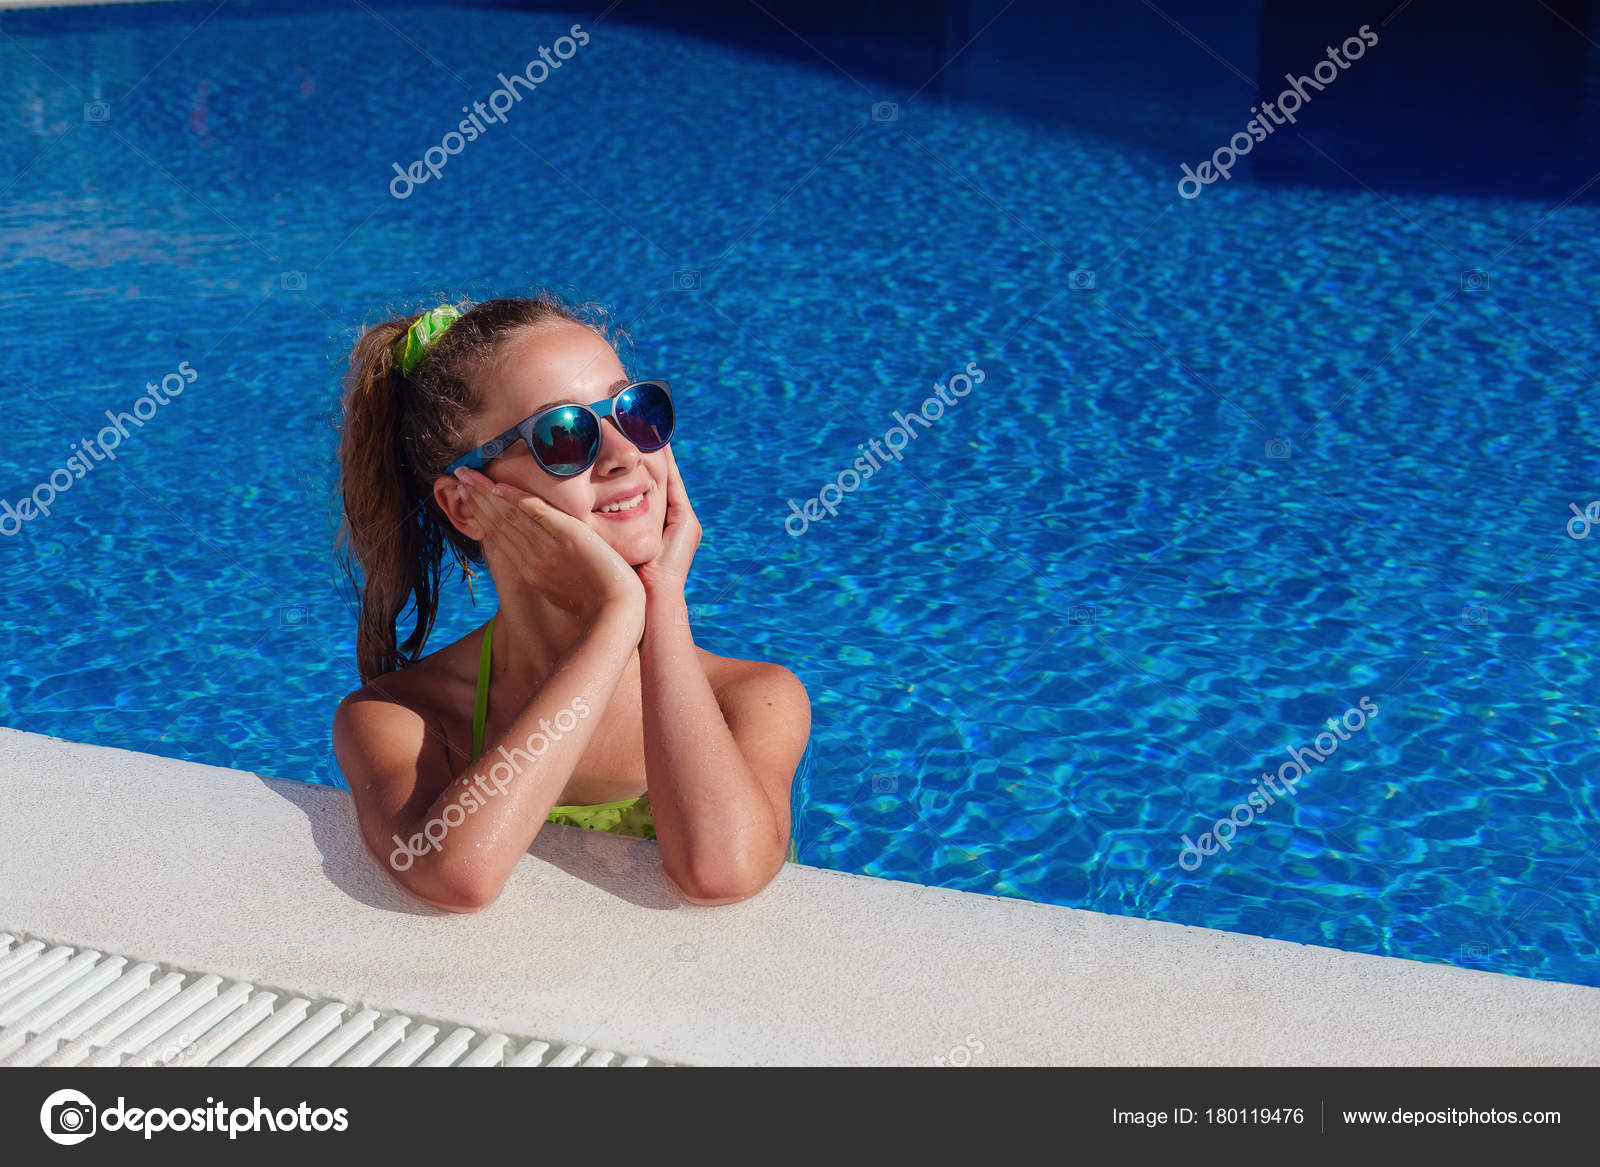 bikini tonåring pool